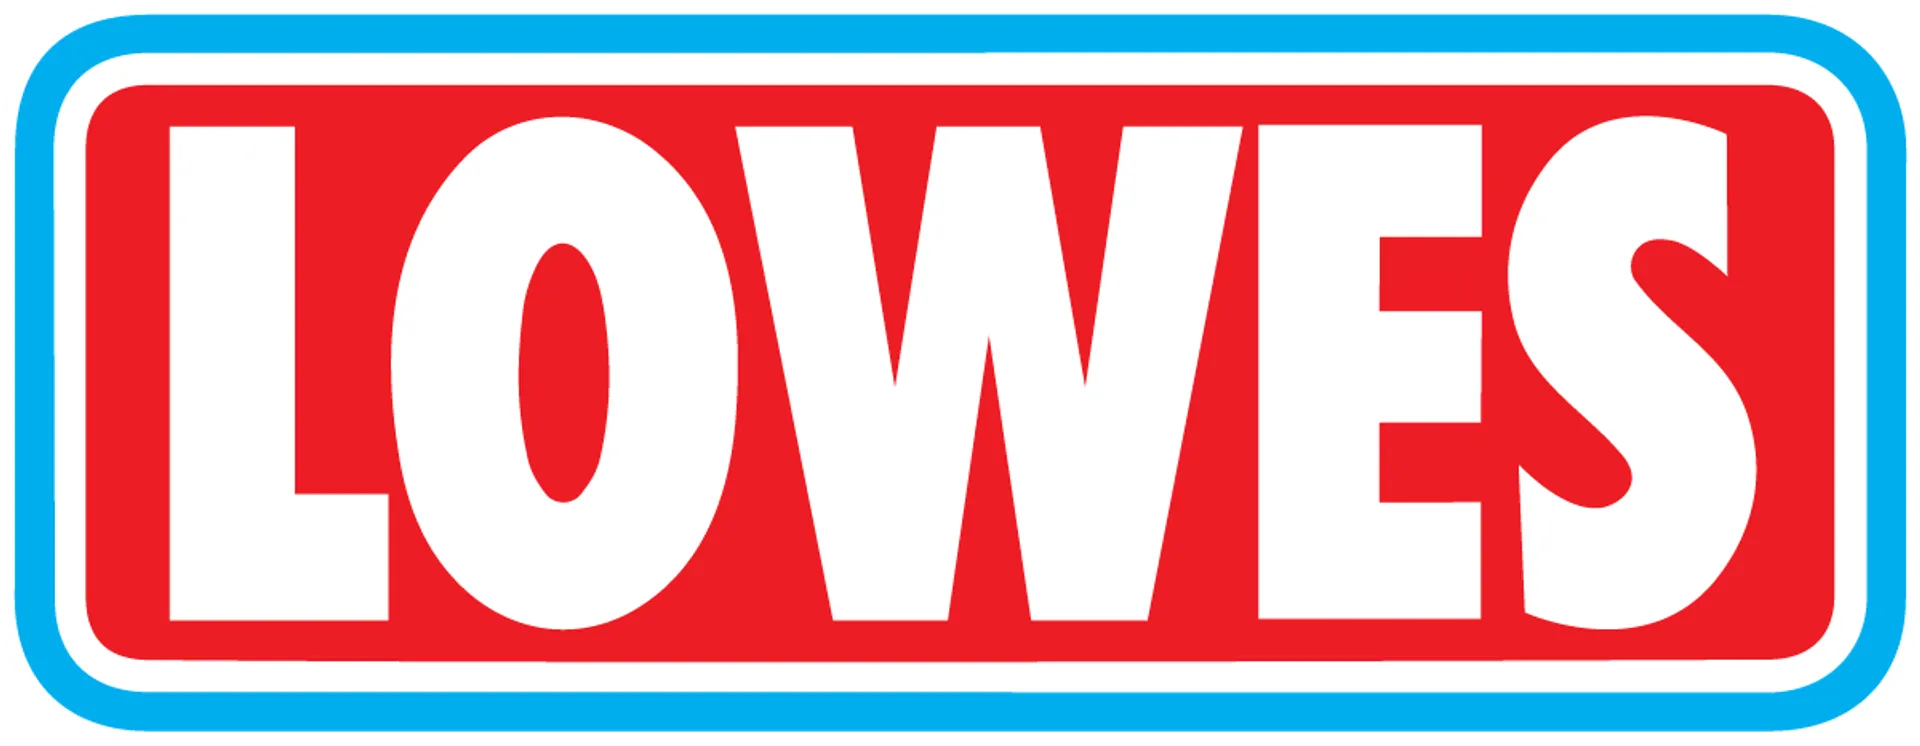 LOWES logo of current flyer